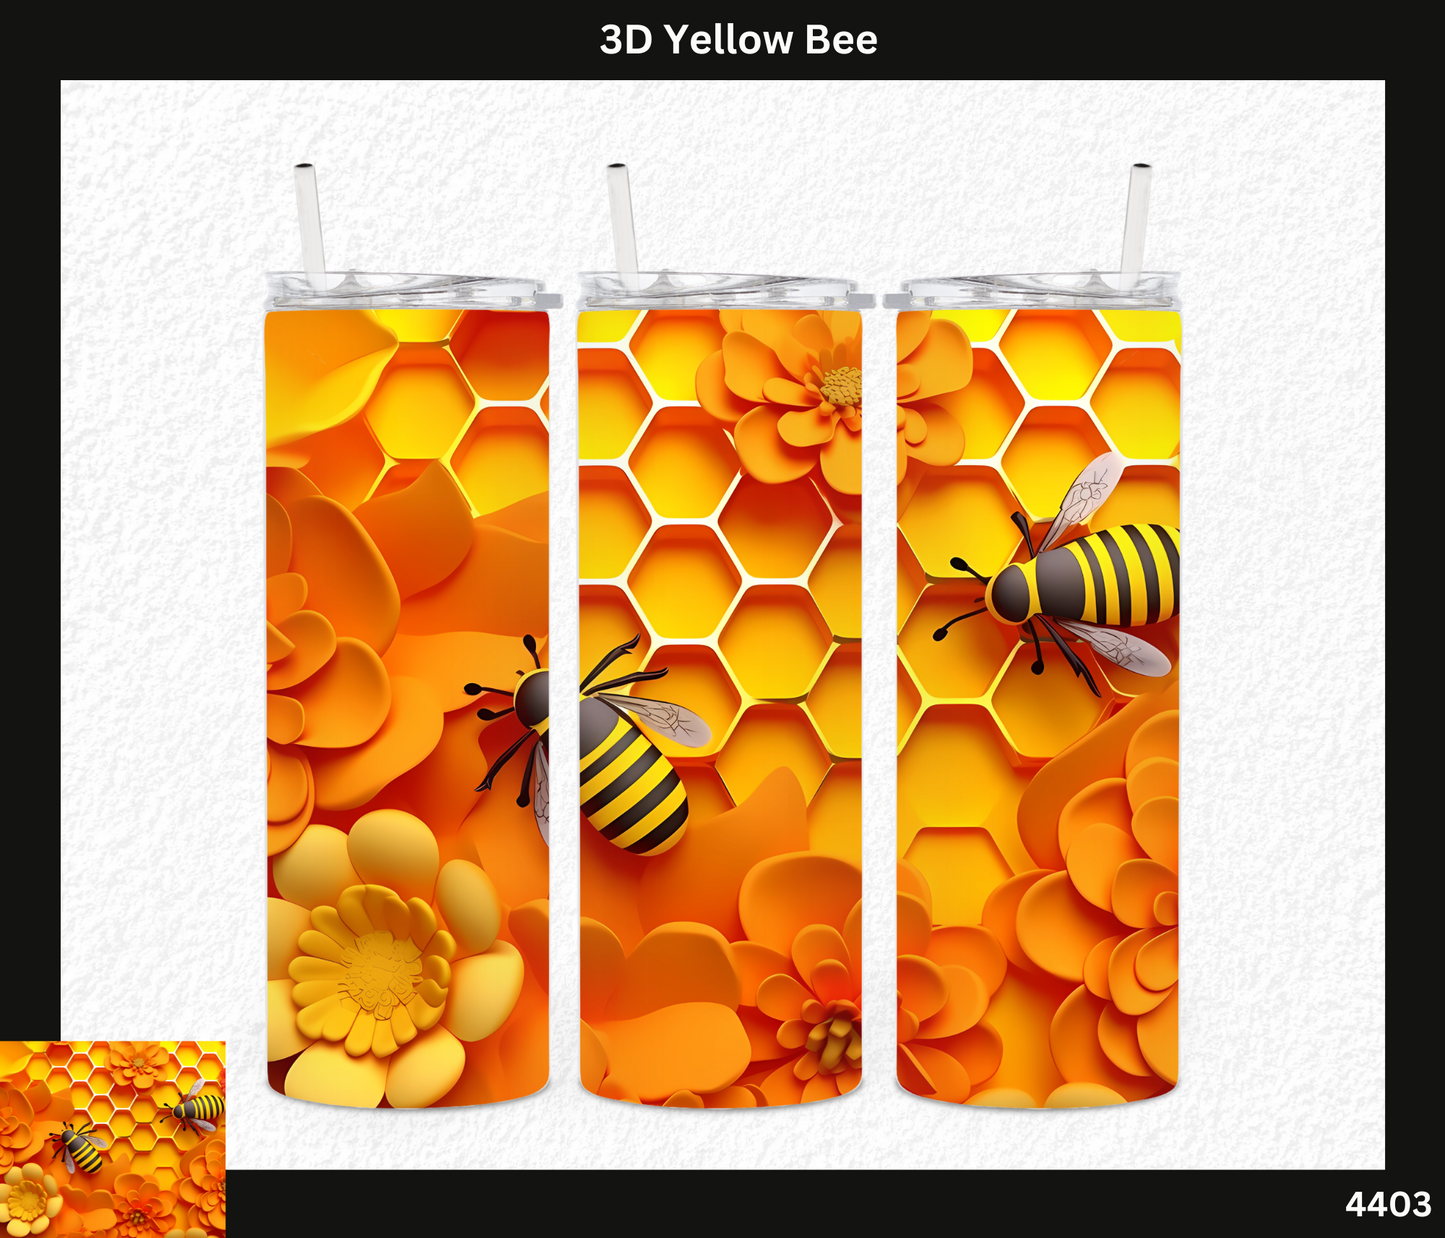 3D Yellow Bee